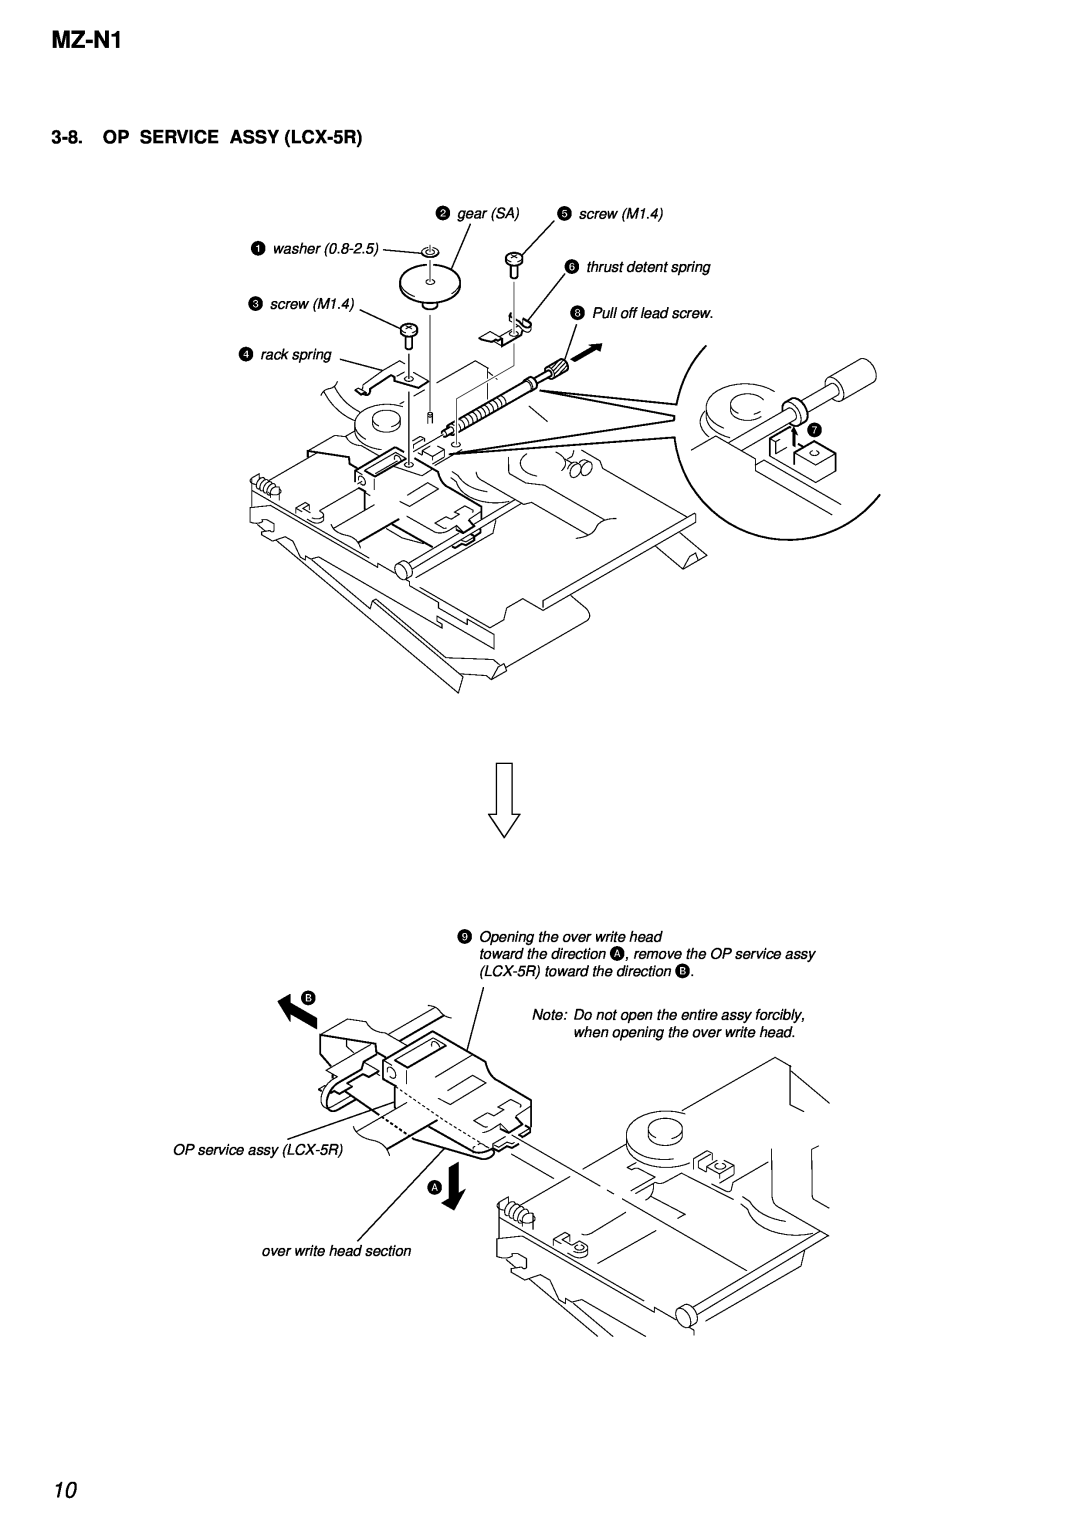 Sony MZ-N1 service manual OP SERVICE ASSY LCX-5R, gear SA, screw M1.4 